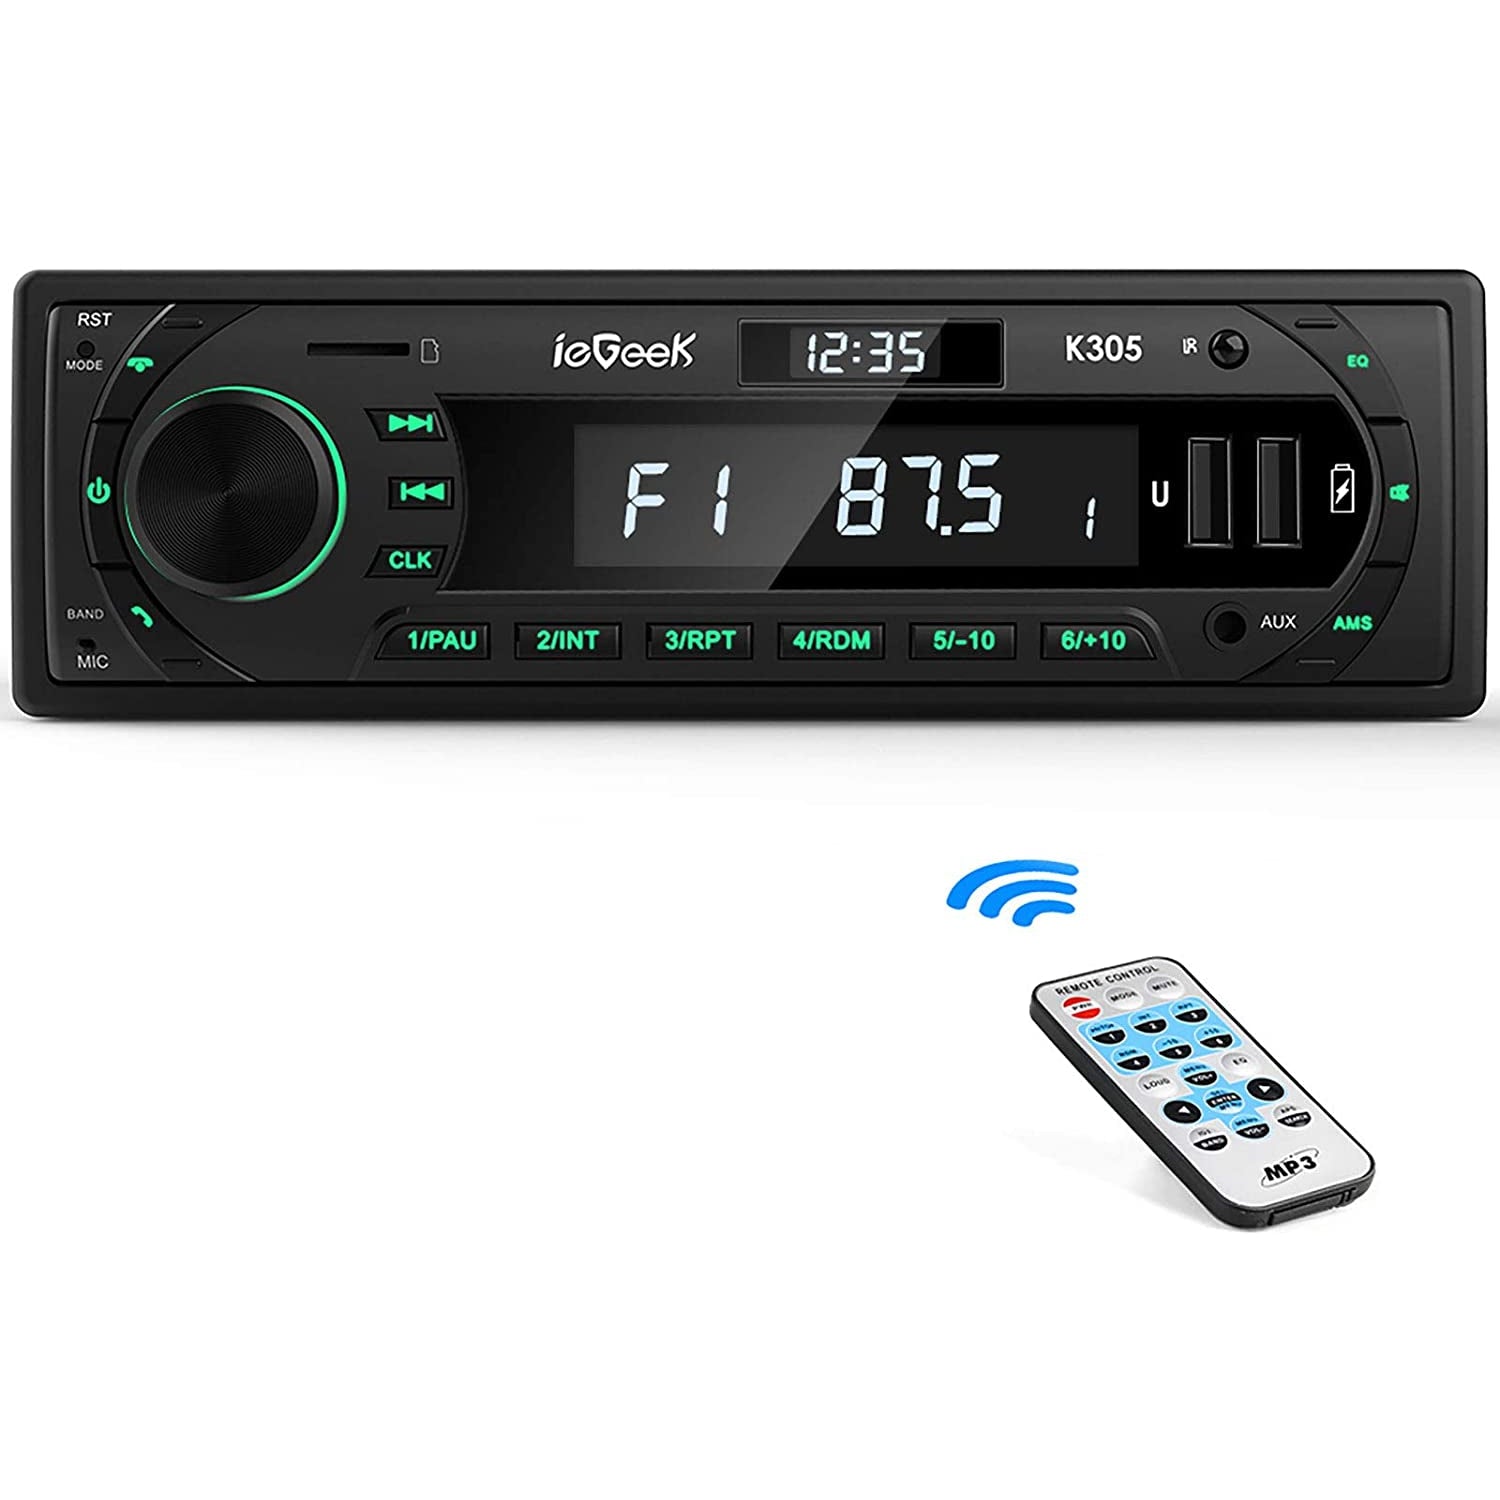 ieGeek K305 Car MP3 Player - Black